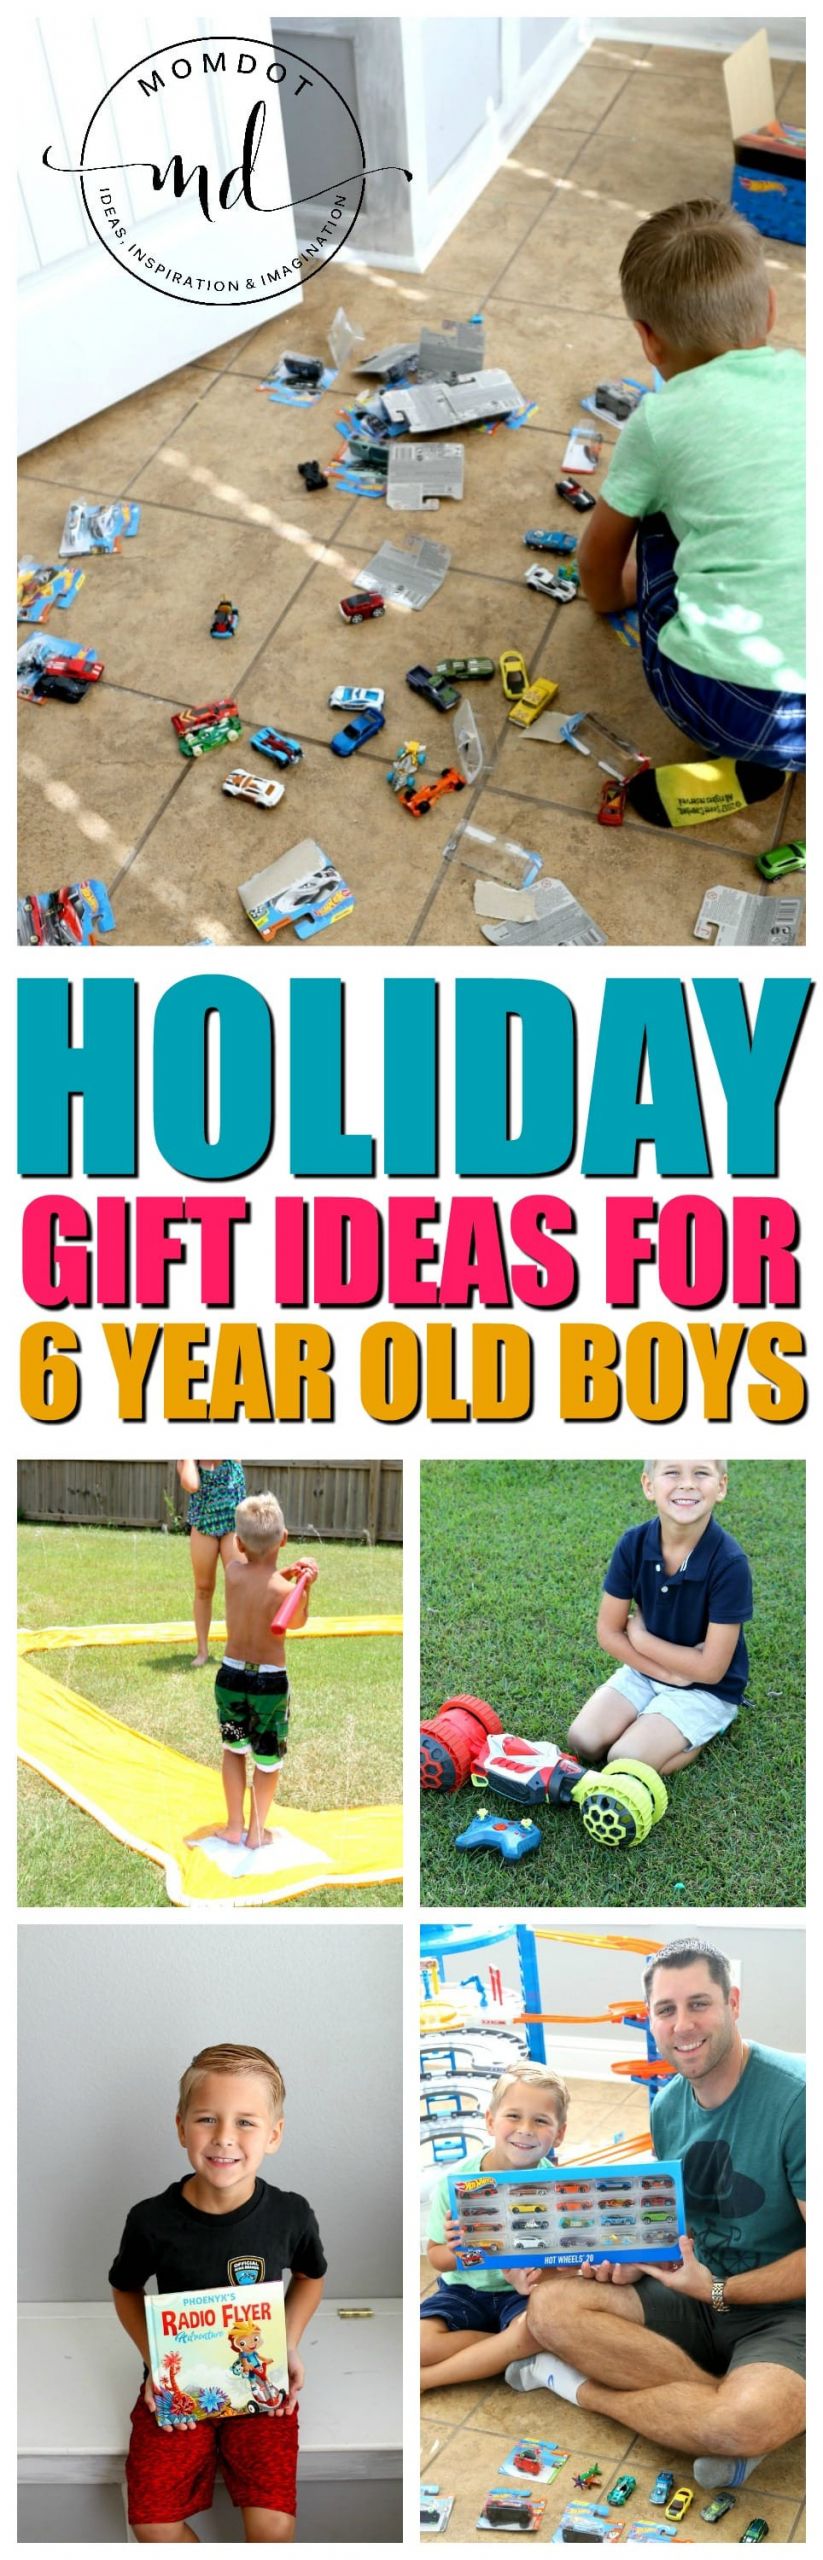 Six Year Old Boy Birthday Gift Ideas
 Gift Ideas for 6 Year Old Boys